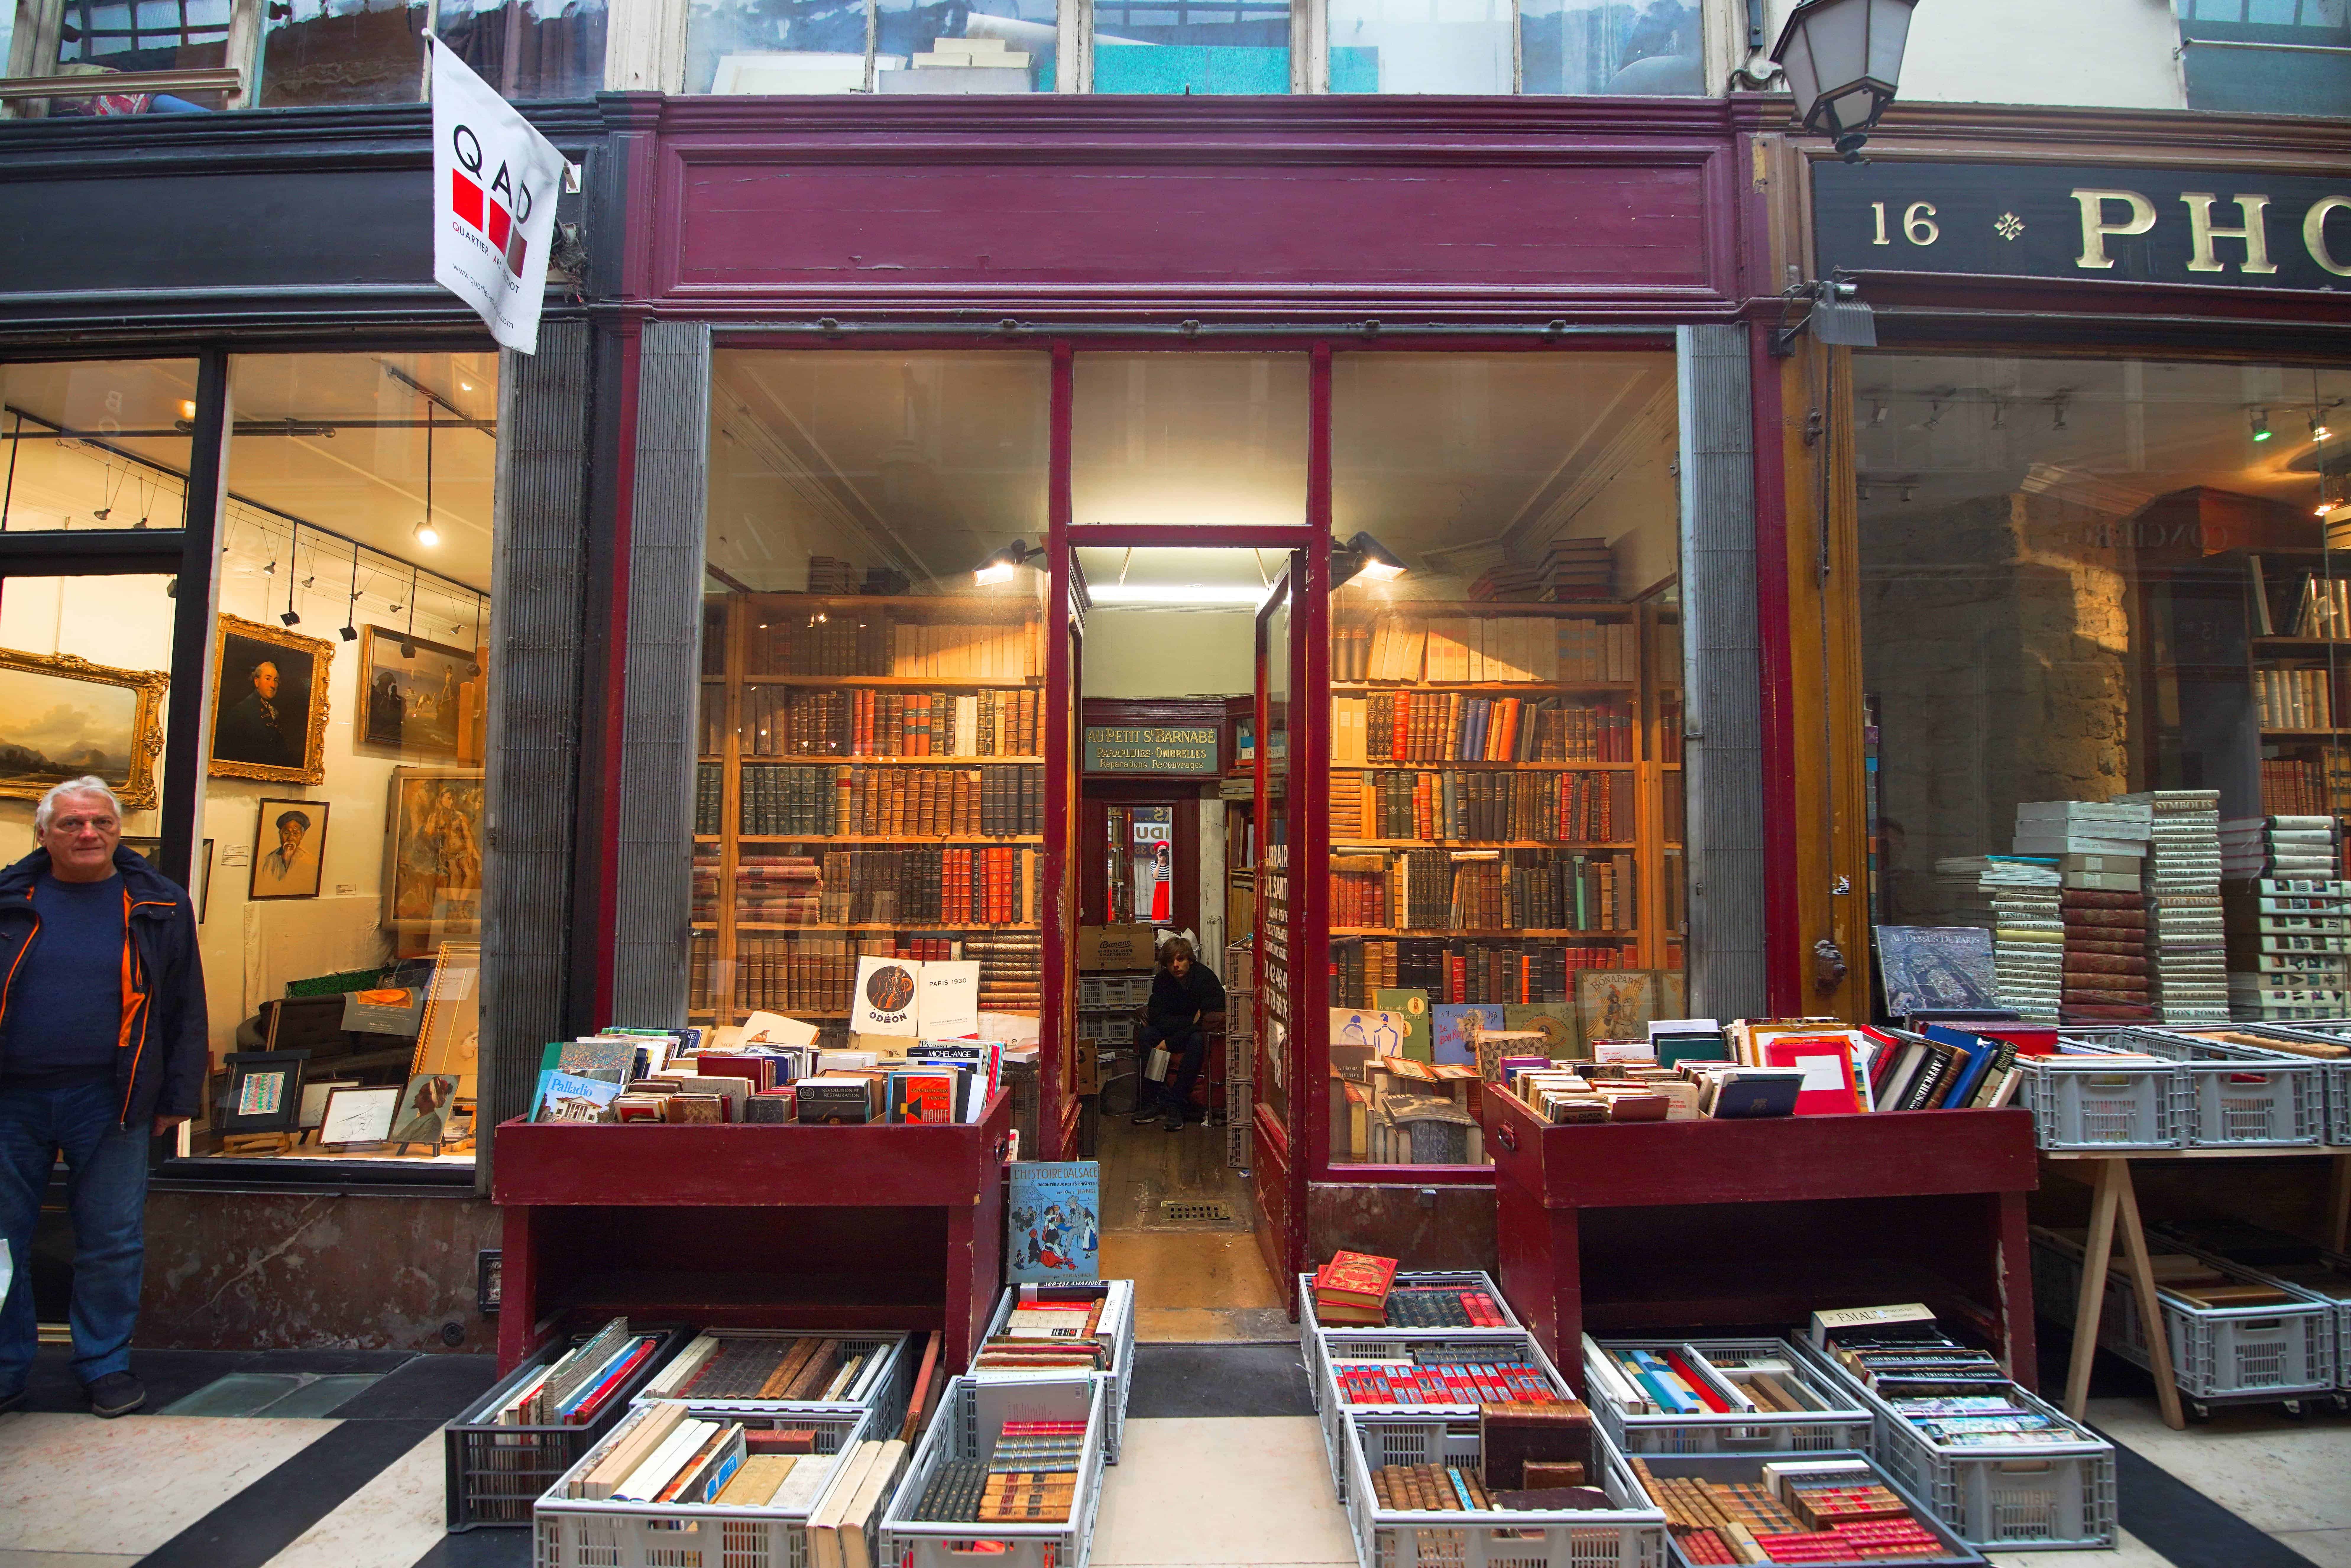 Passage Verdeau Bookstores are a popular shopping passage in Paris